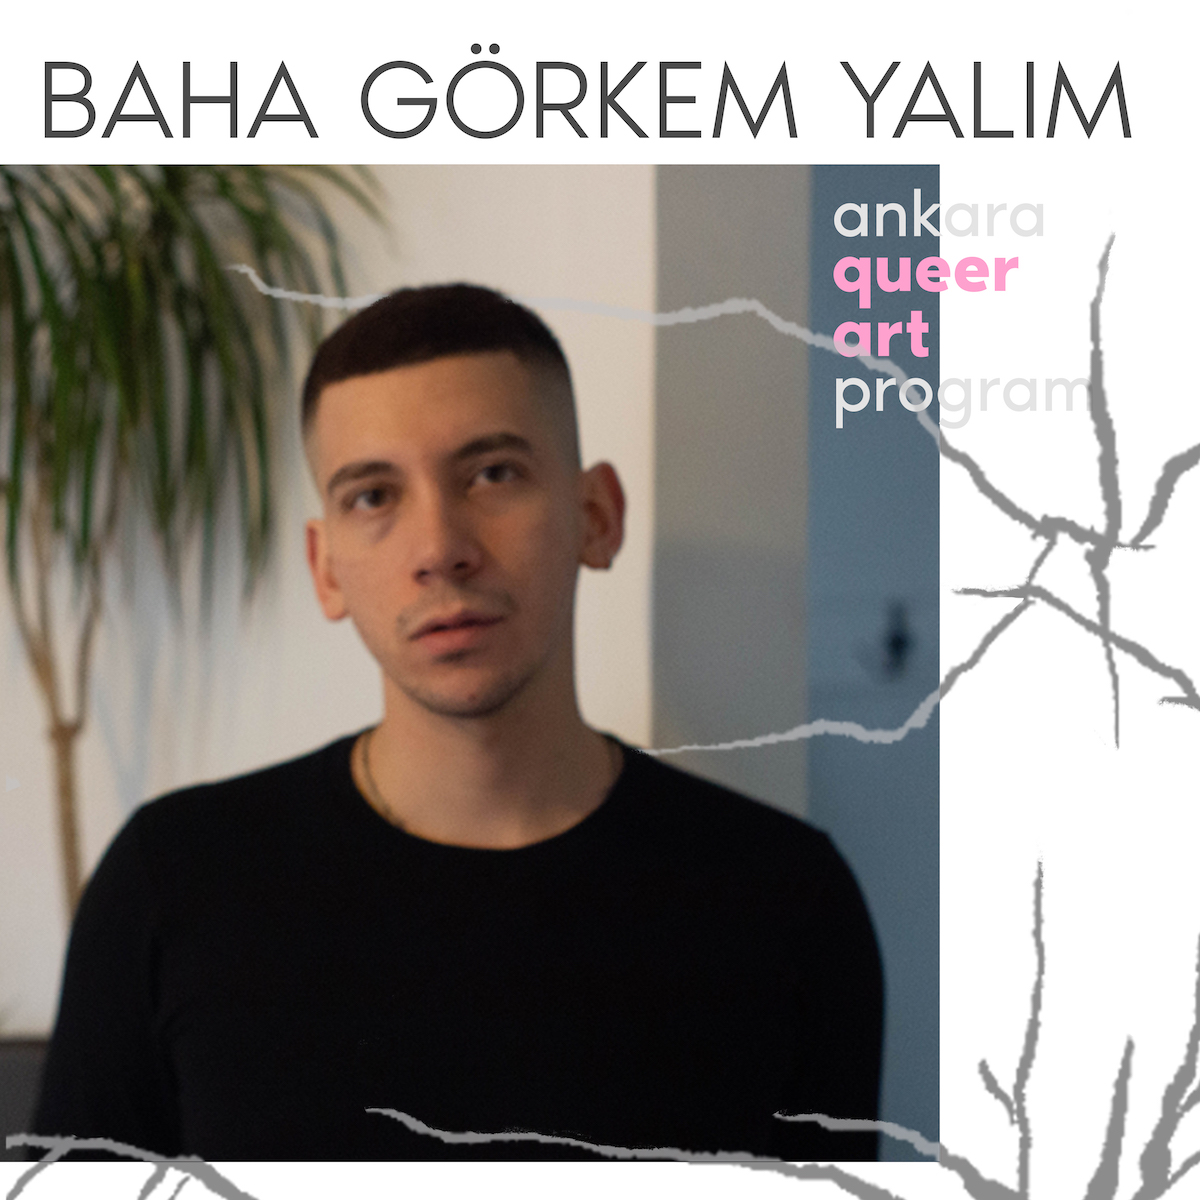 Meet Baha Görkem Yalım Kaos GL - News Portal for LGBTI+